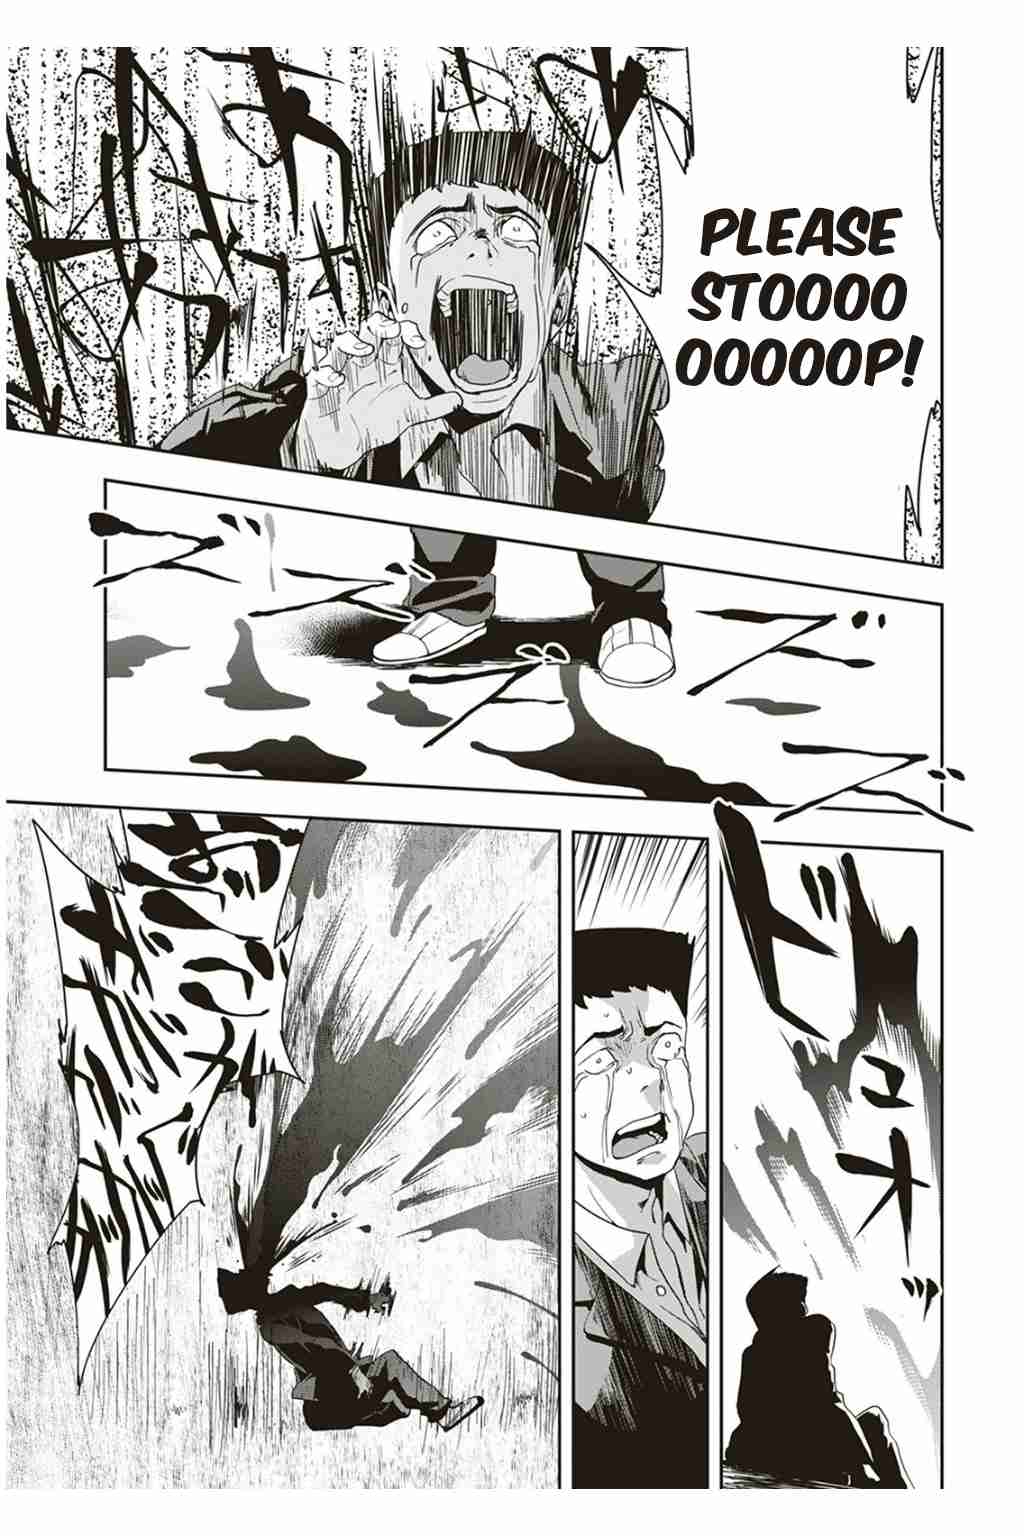 Ushiro The Somber God of Death Vol. 1 Ch. 2